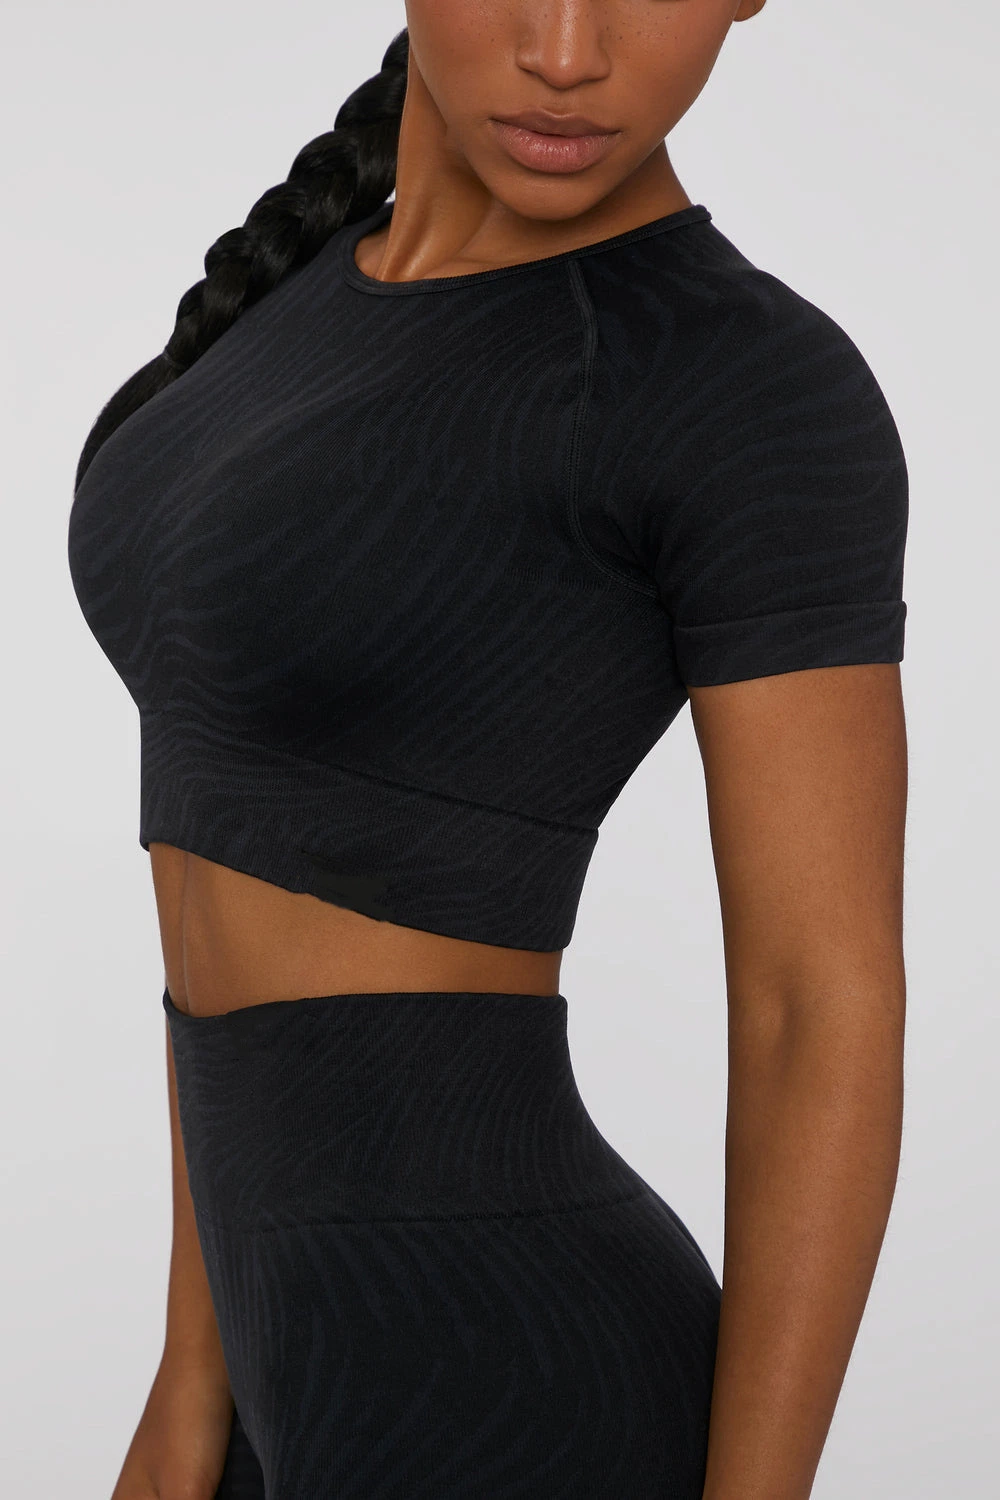 Wholesale/Supplier Sweat Suits Seamless Yoga Set Women Zebra 2PCS Crop Top Shirt Sport Workout High Waist Shorts Two Piece Suit Female Fitness Gym Sport Wear